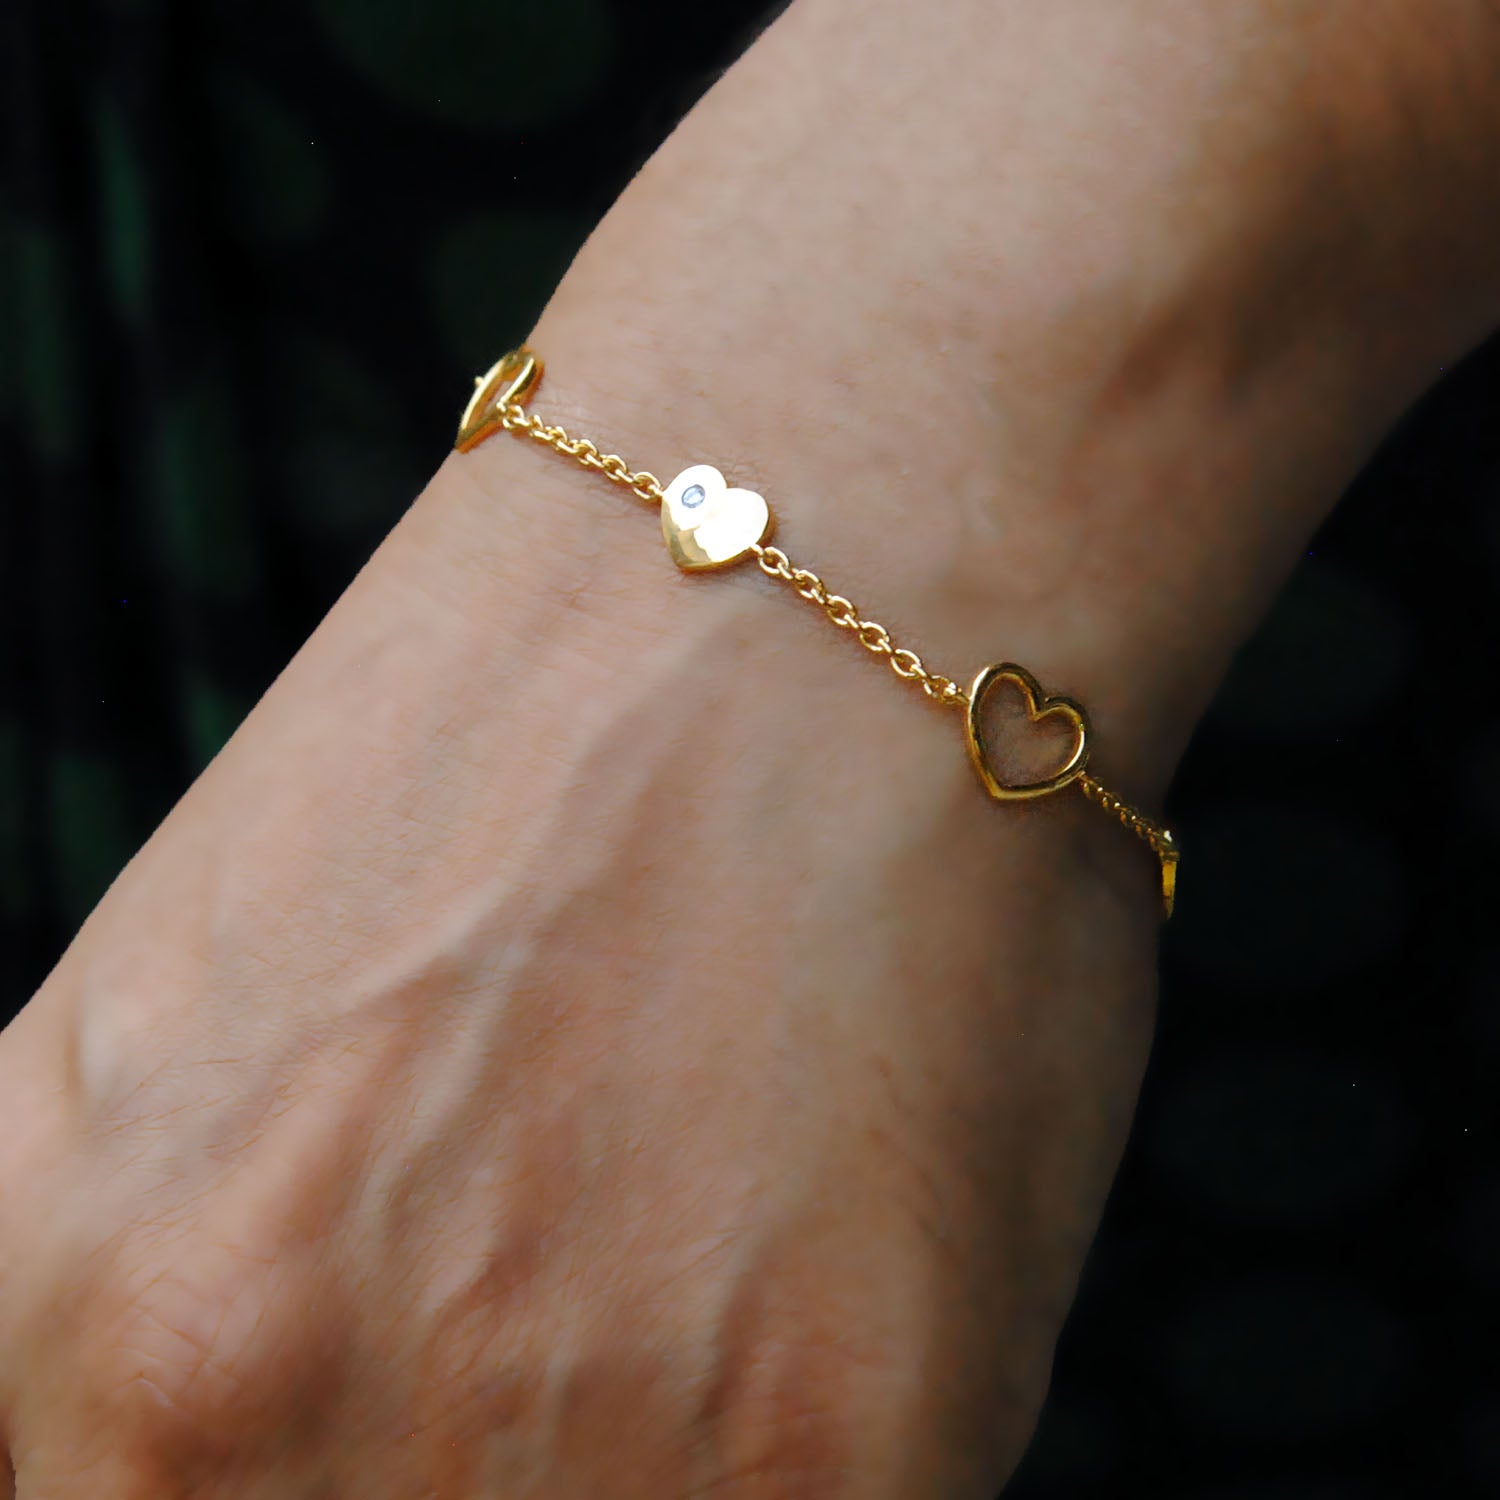 Amazon.com: Solid 14k Yellow Gold Love Heart Charm Pendant Bracelet 7.5